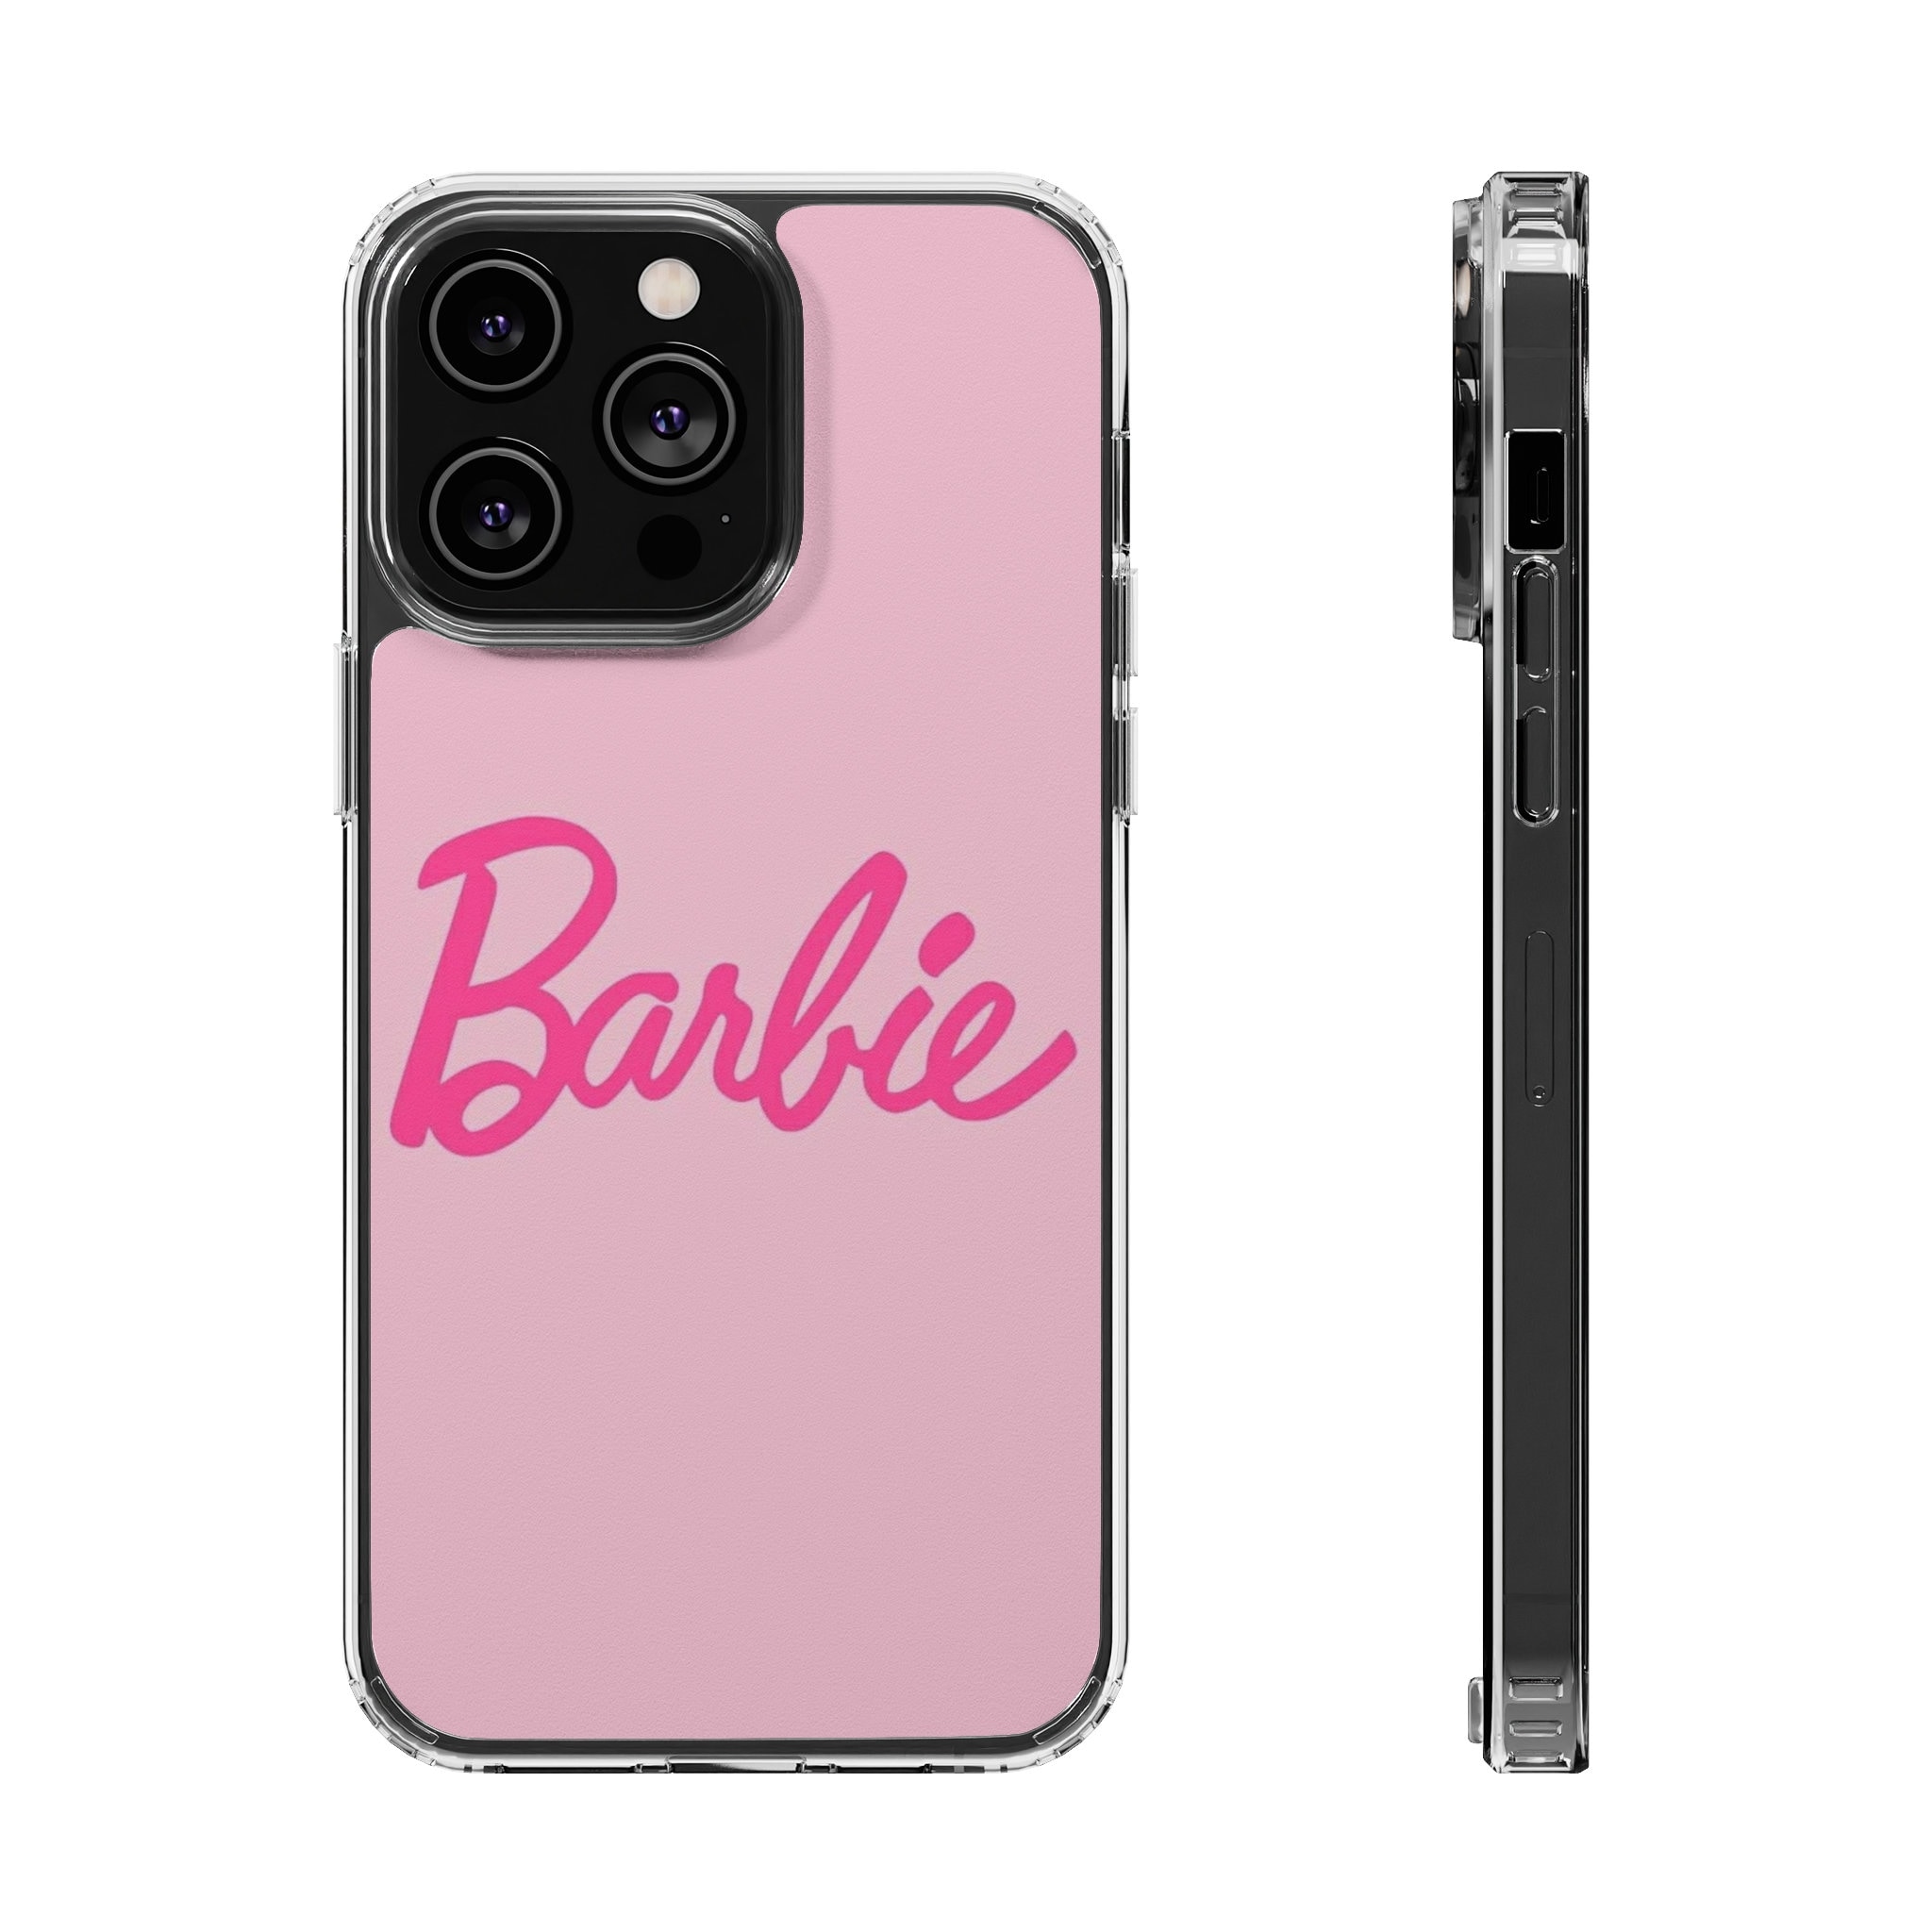 BARBIE PINK BLING GLITTER 1 Samsung Galaxy S21 Plus Case